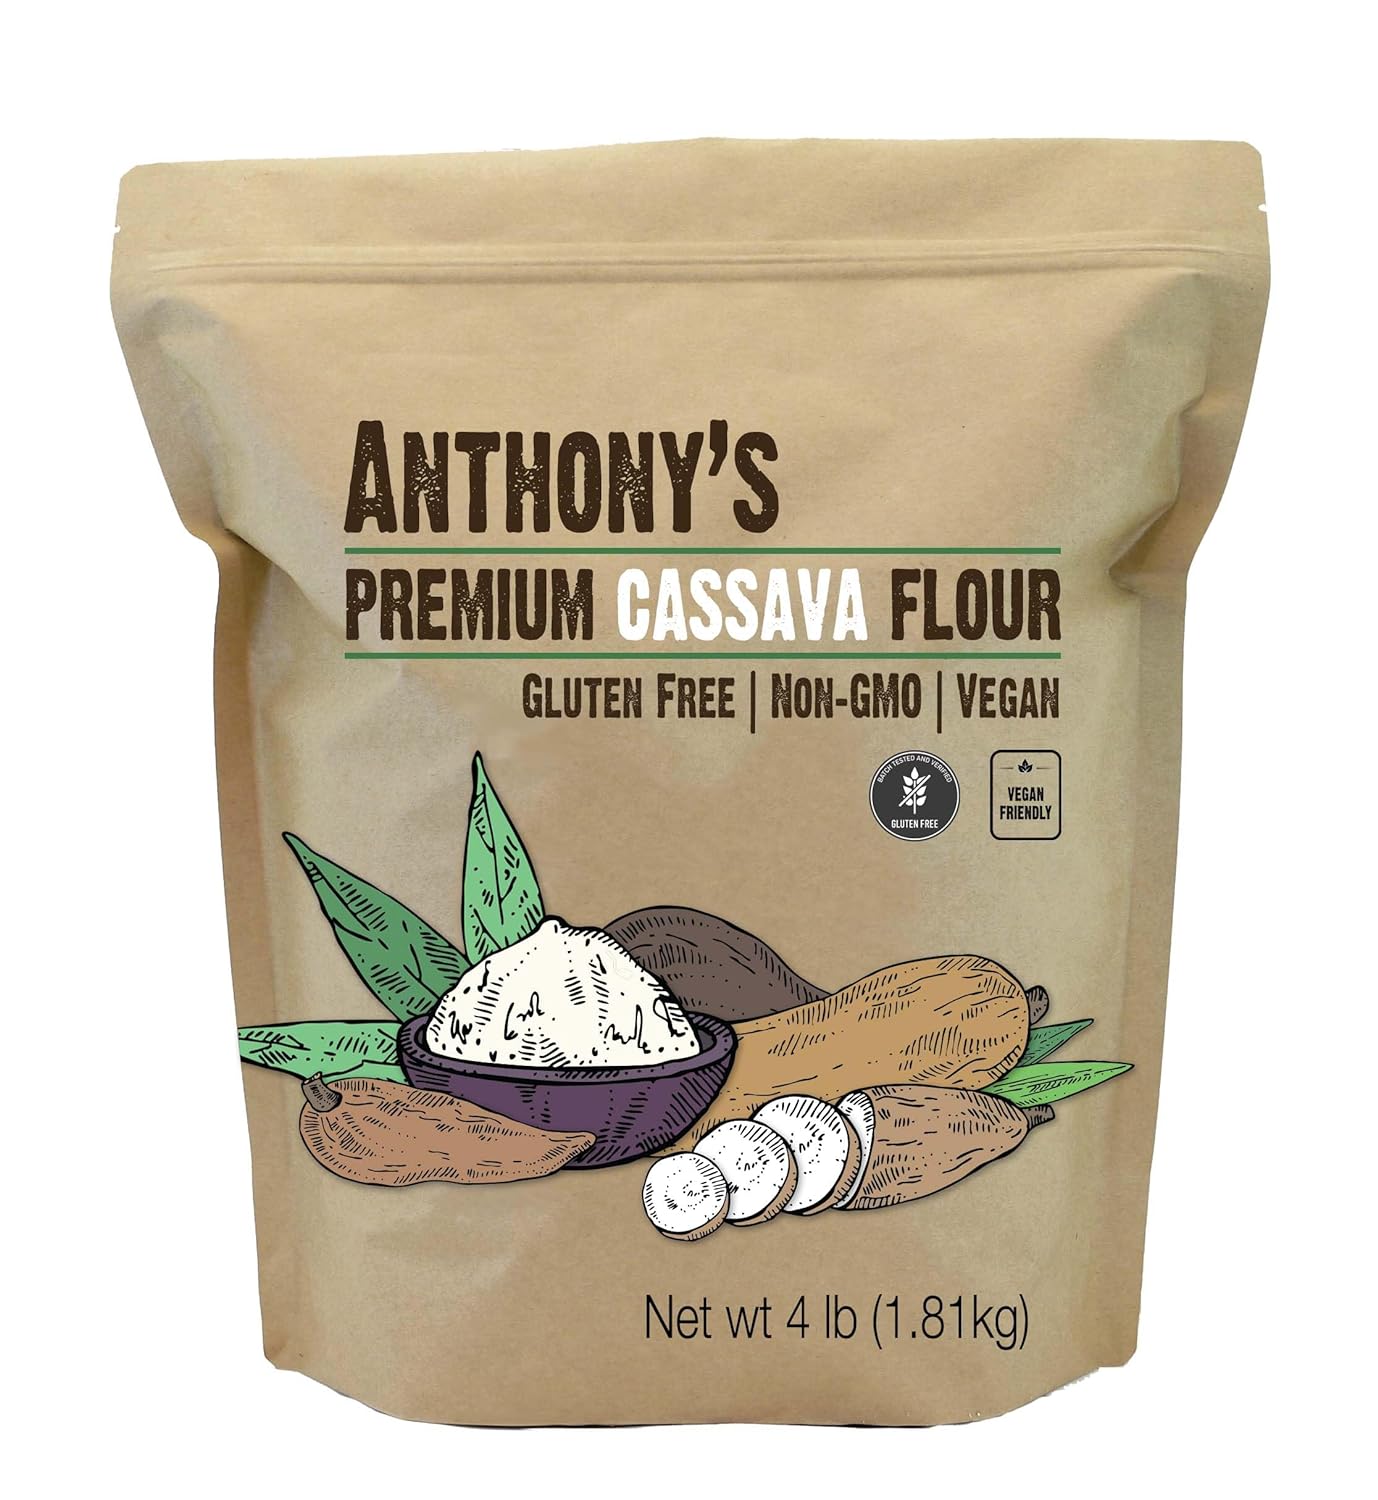 Anthony's Good Cassava Flour 1.81kg